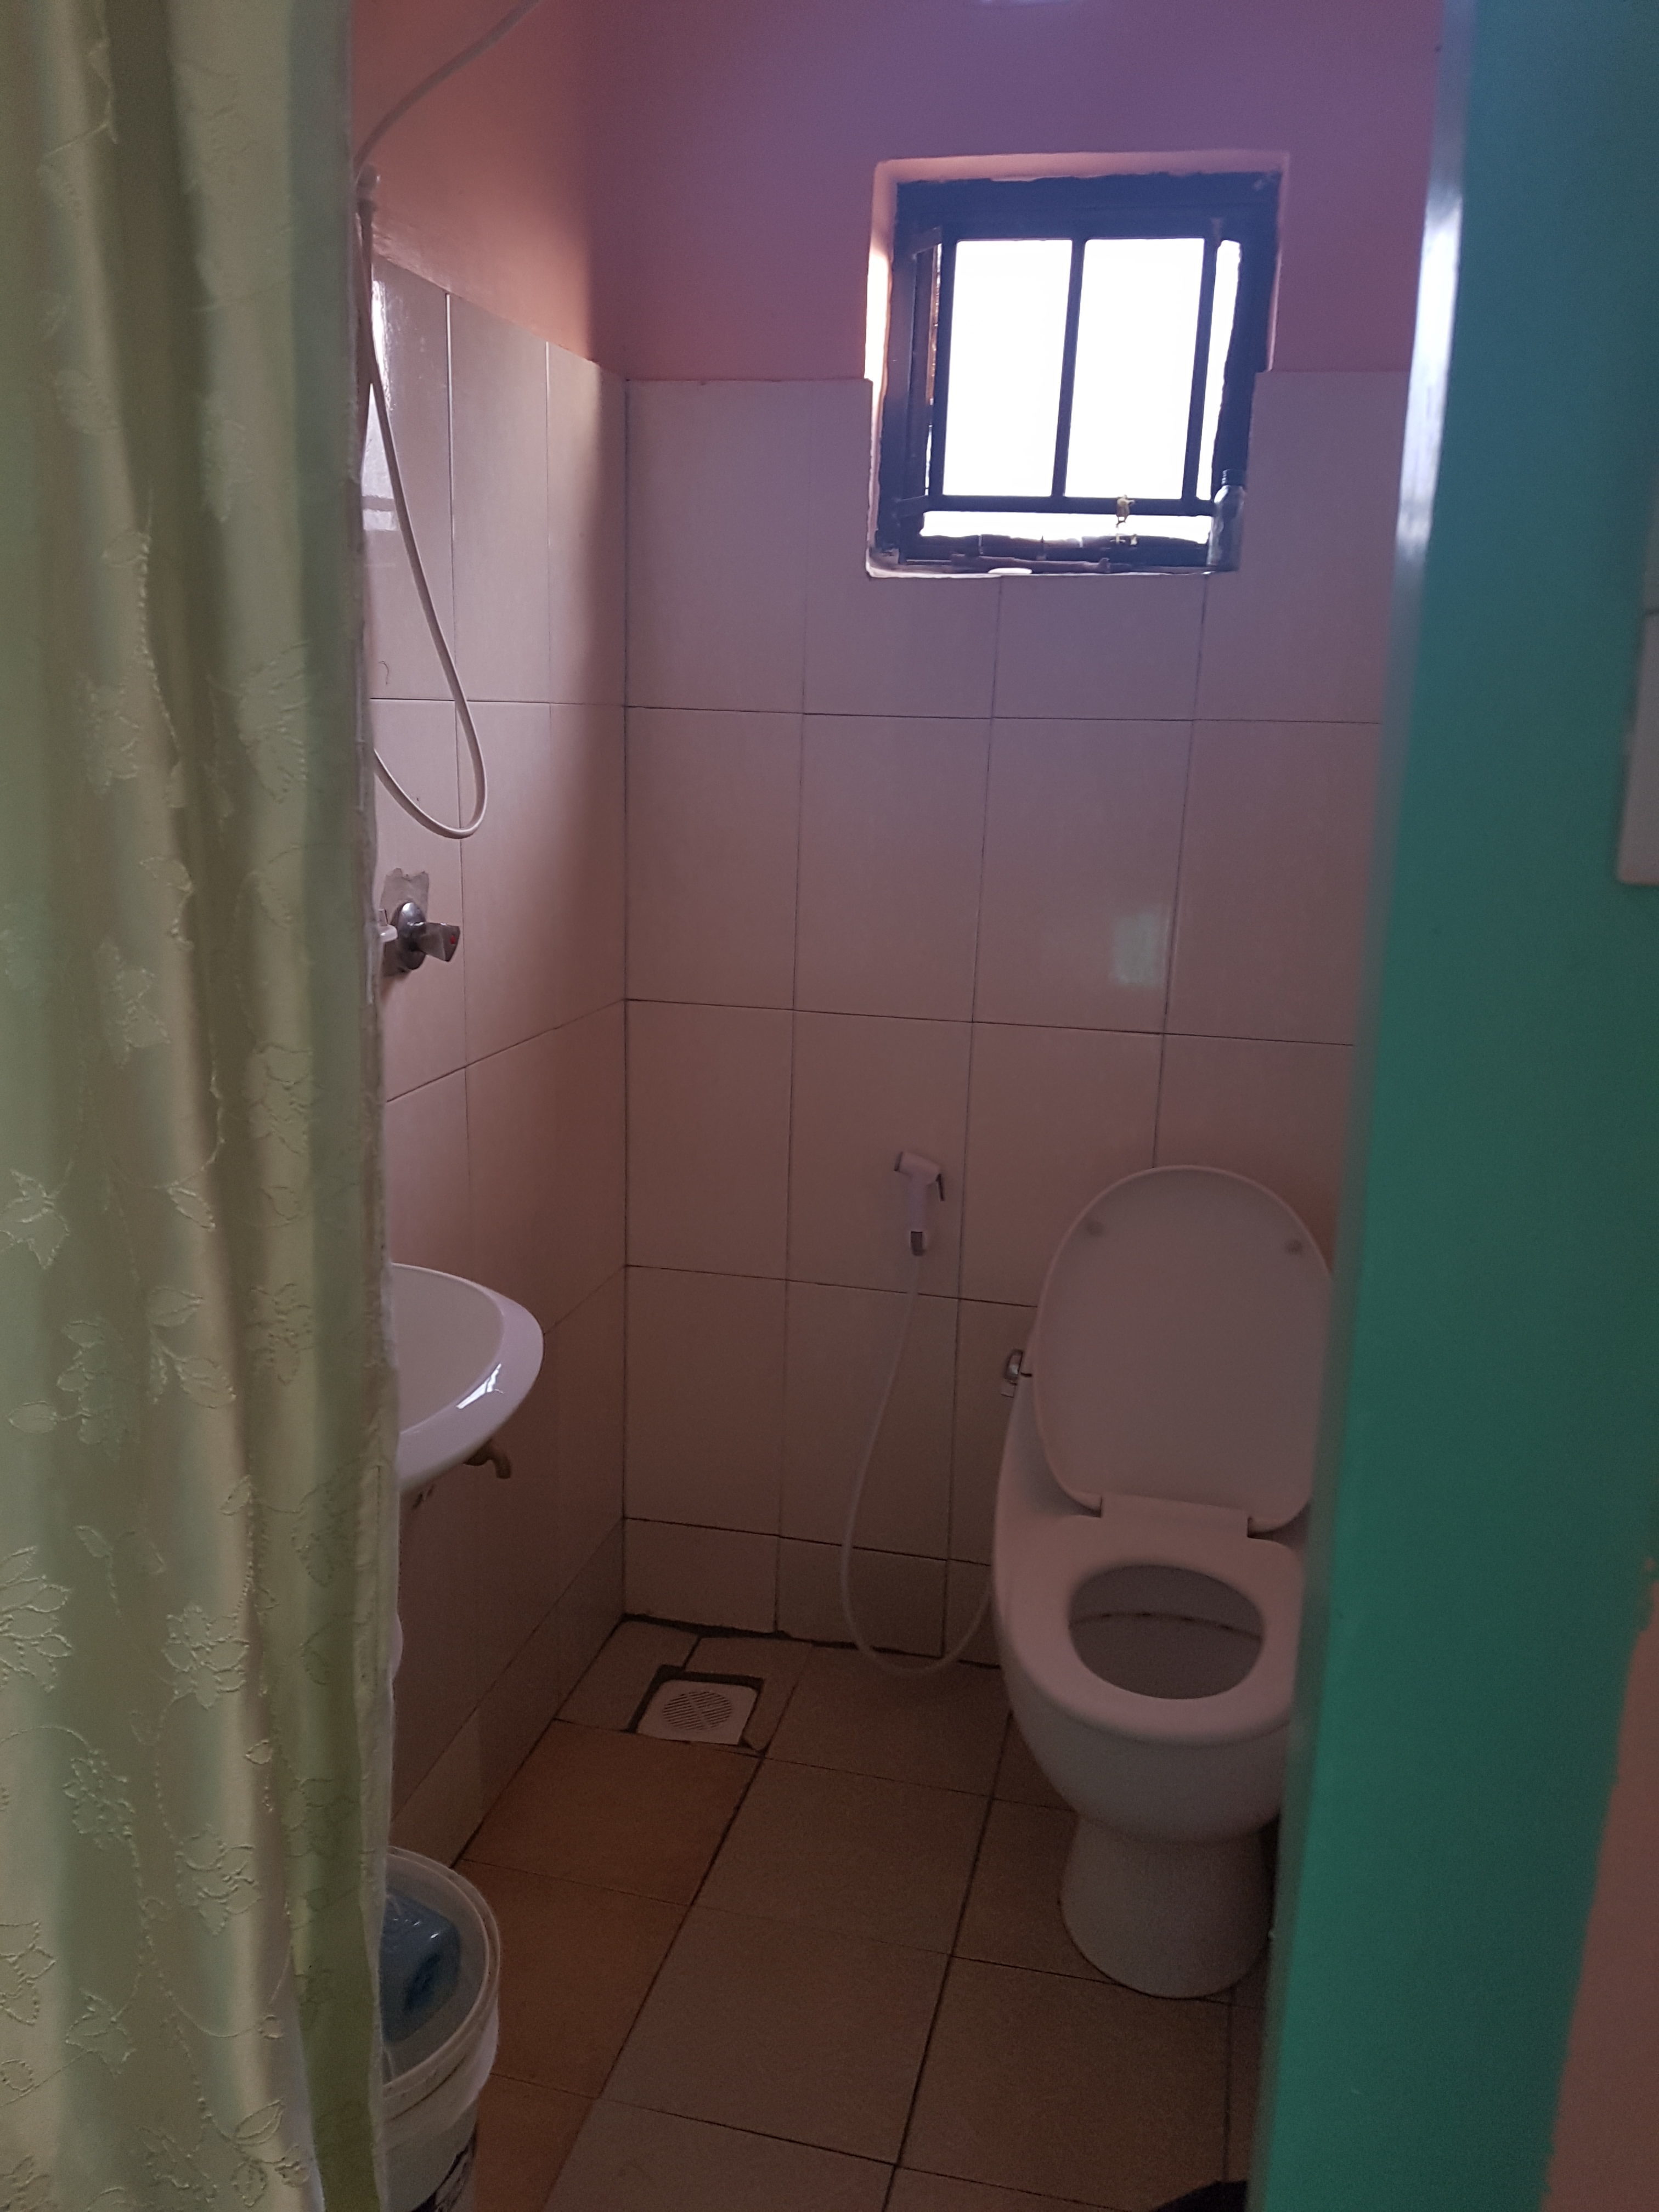 The bathroom at Massai's Airbnb